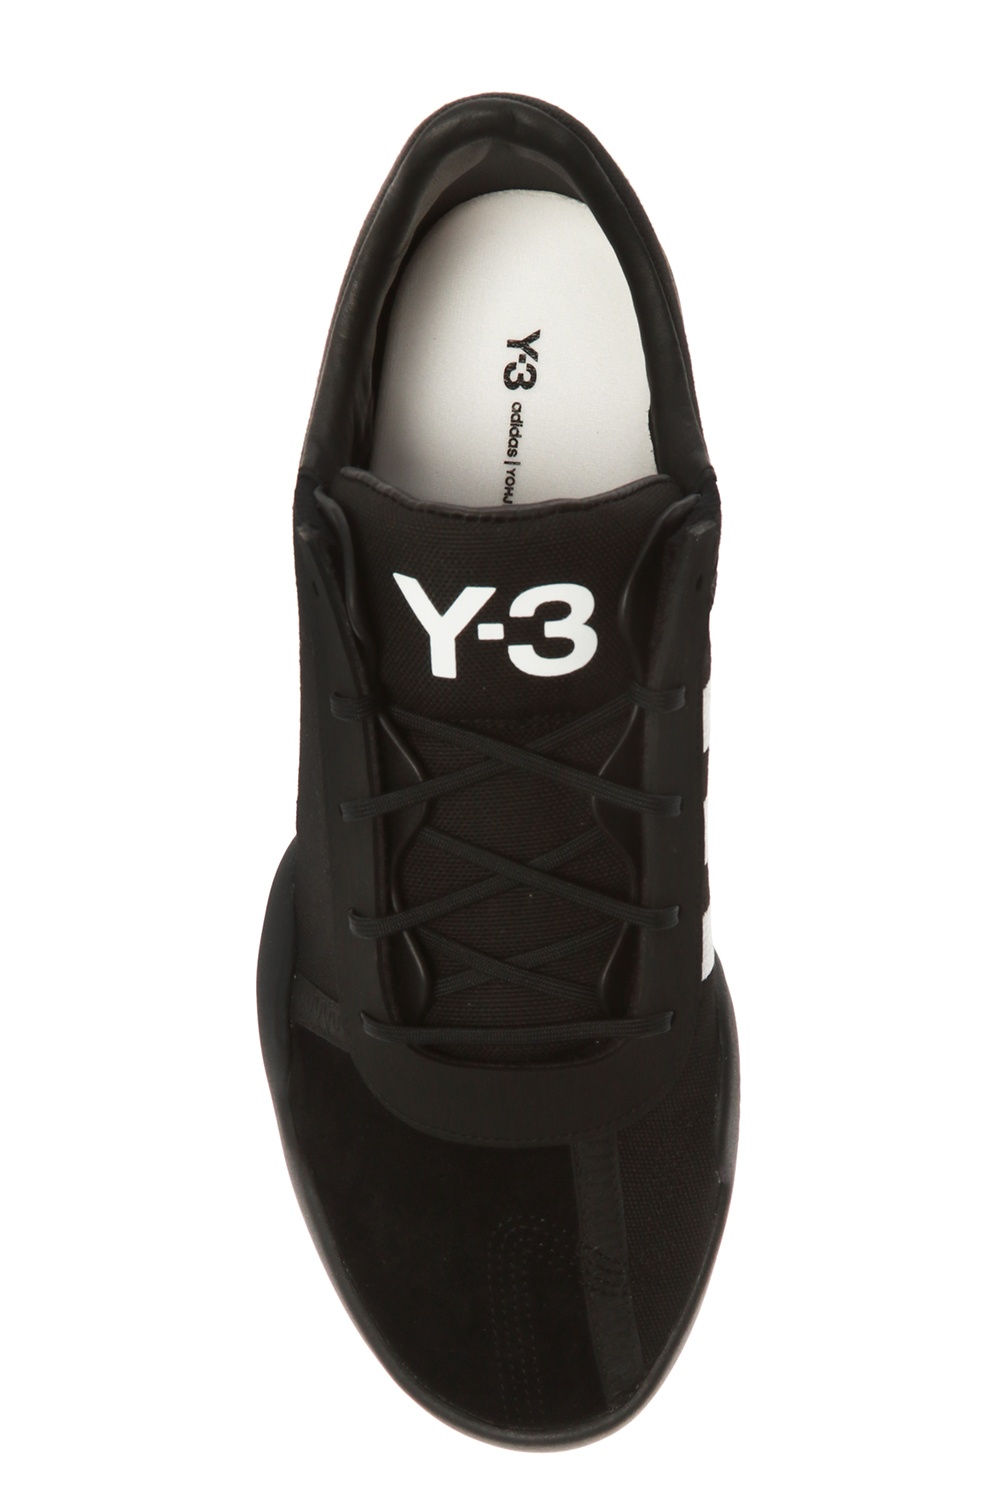 Yunu' sneakers Y-3 Yohji Yamamoto - Vitkac Singapore